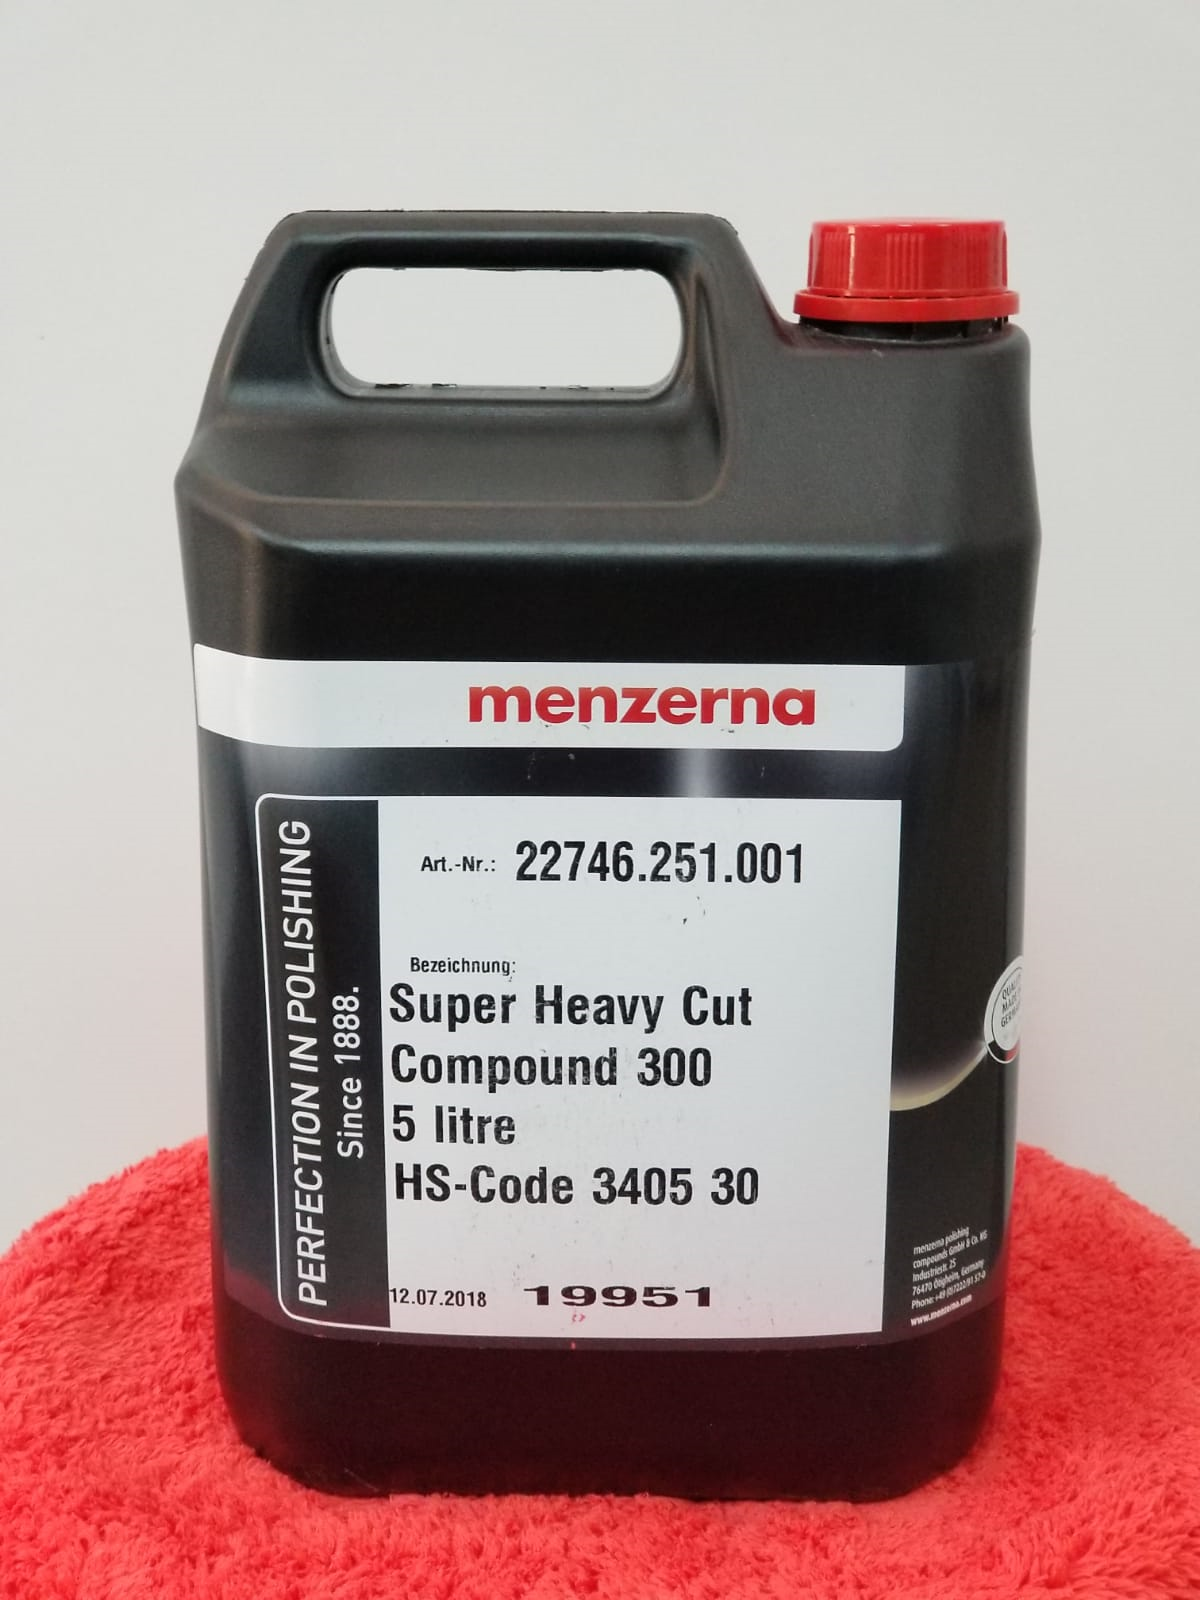 Menzerna Super Heavy Cut 300 - High Performance Car Polishing Compound 